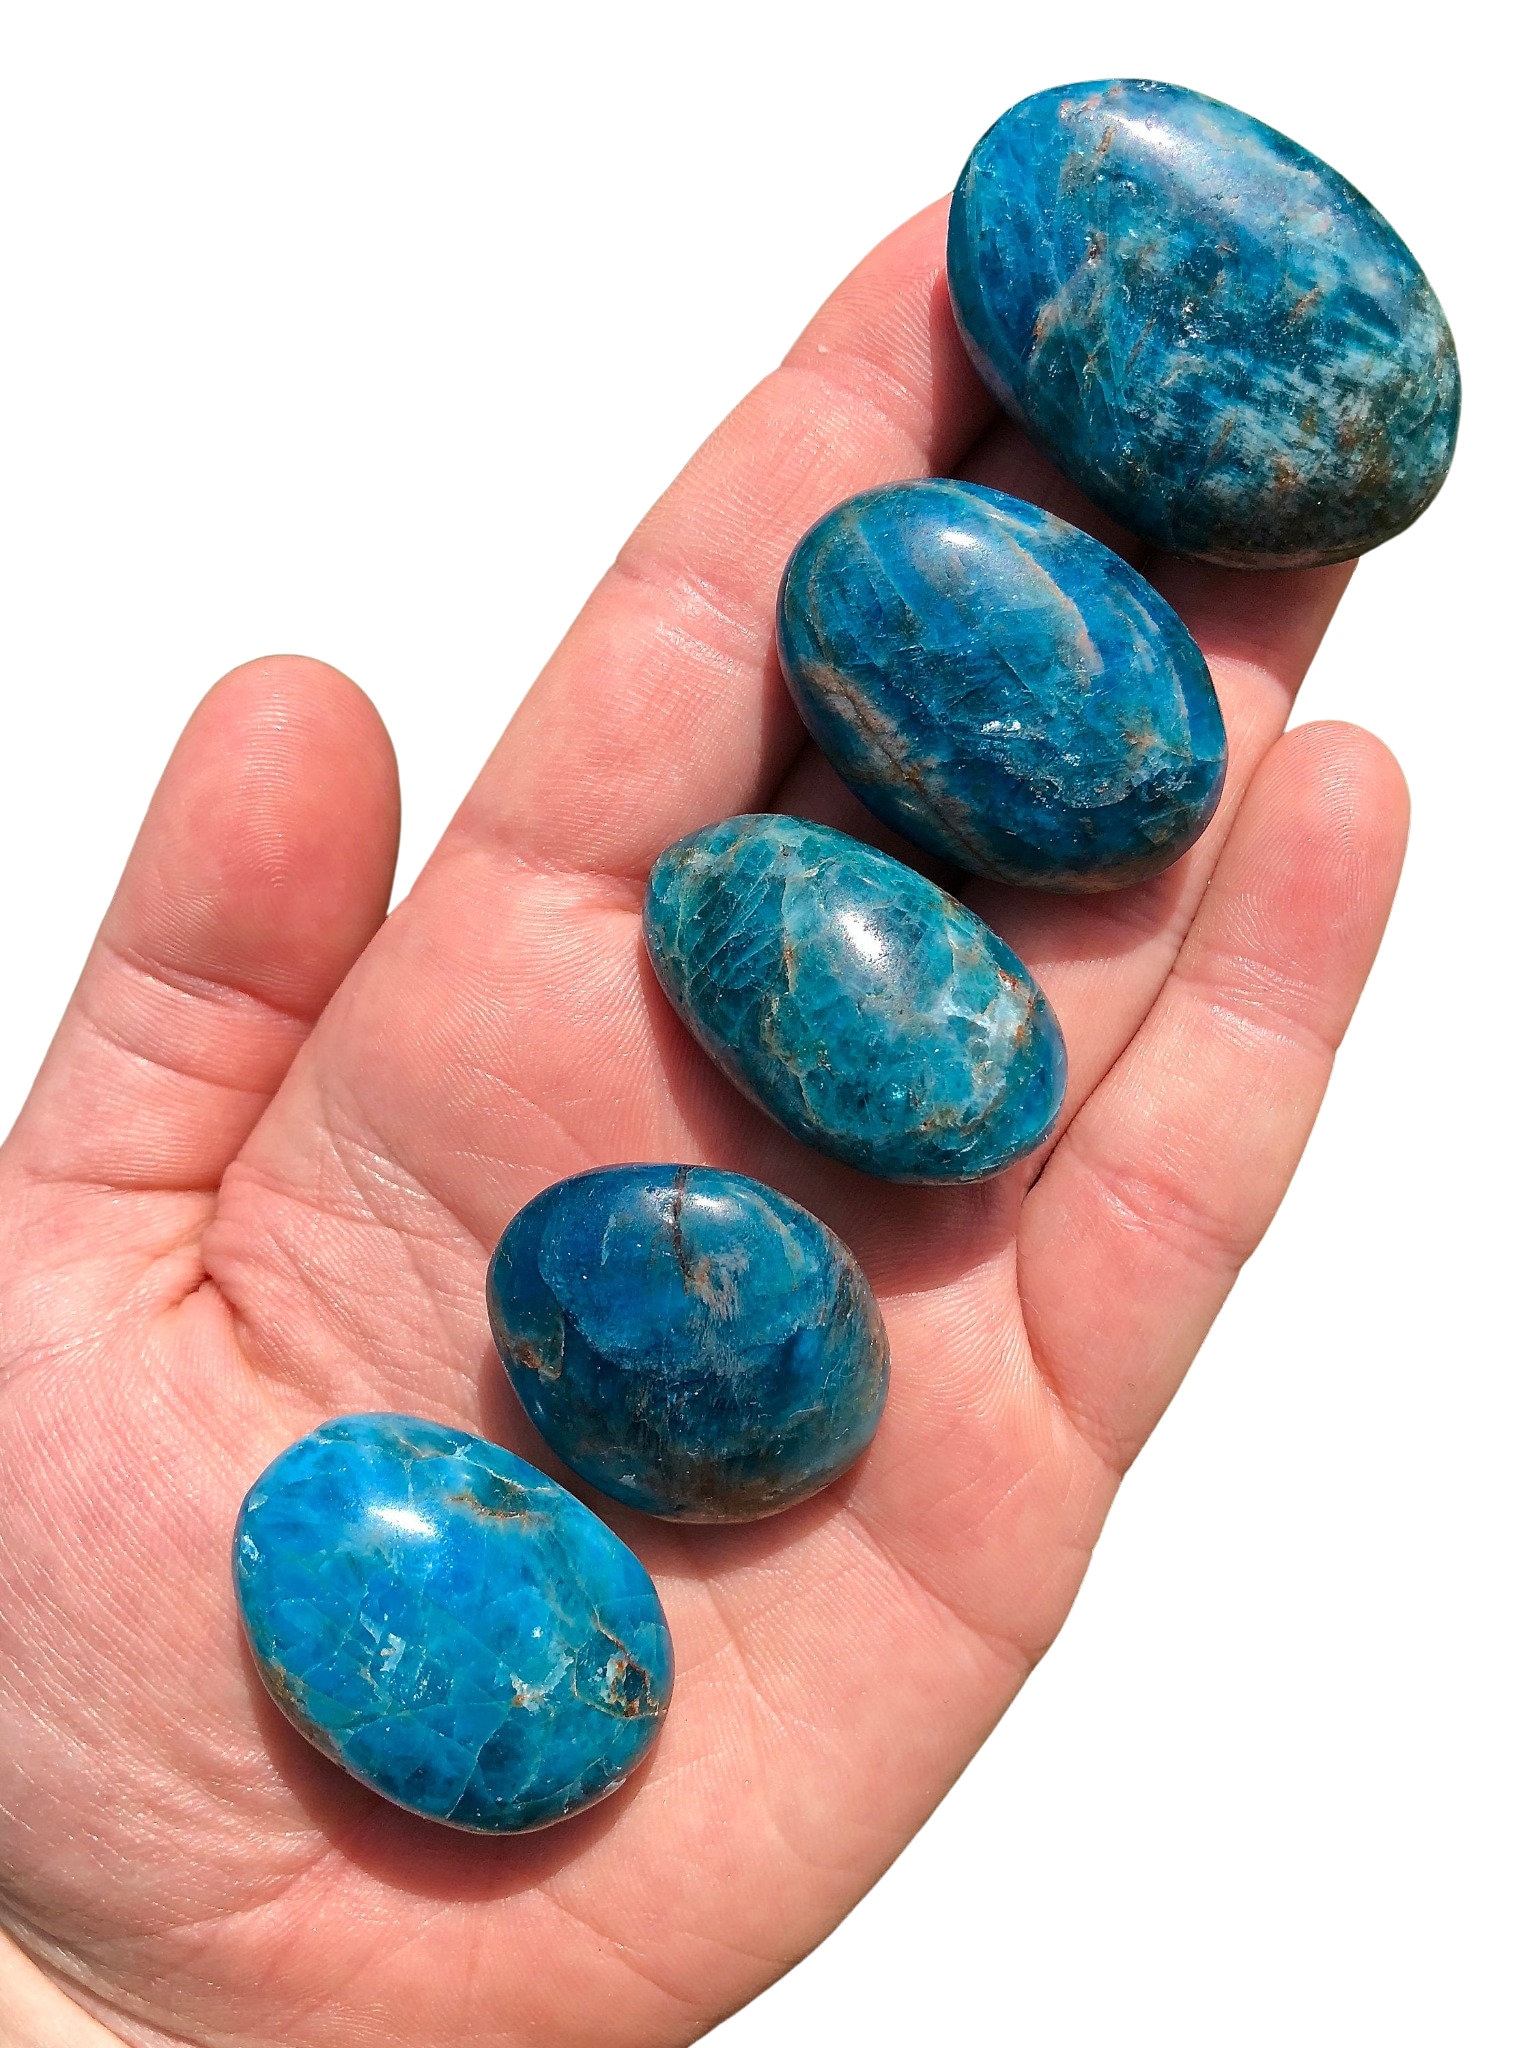 Meditation Stone E0700 BLUE APATITE Tumbled Stones-Healing Crystals,Unique Gift 